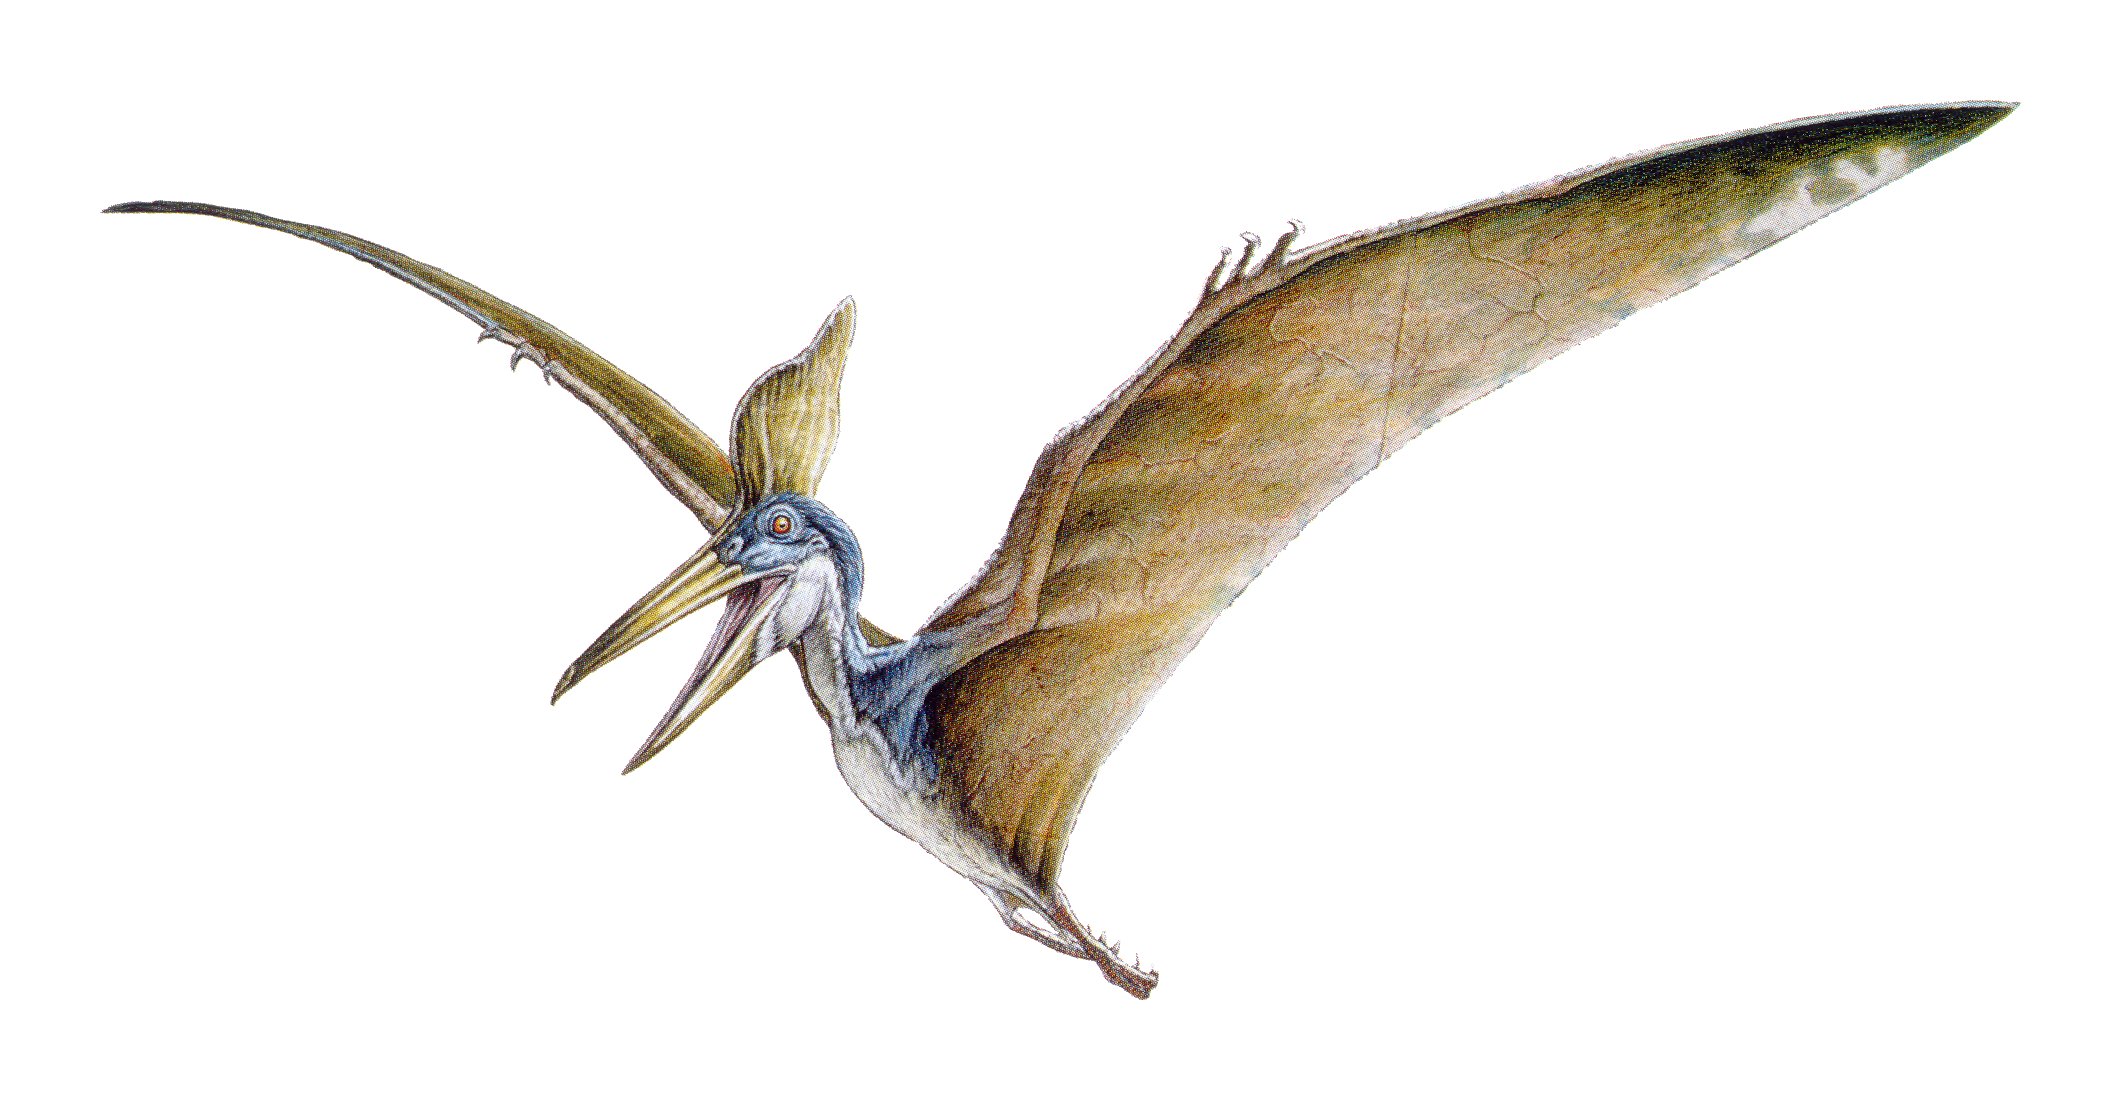 The Lost World Jurassic Park Pteranodon Concept Drawing Jurassic Park Prehistoric Animals Jurassic World Dinosaurs